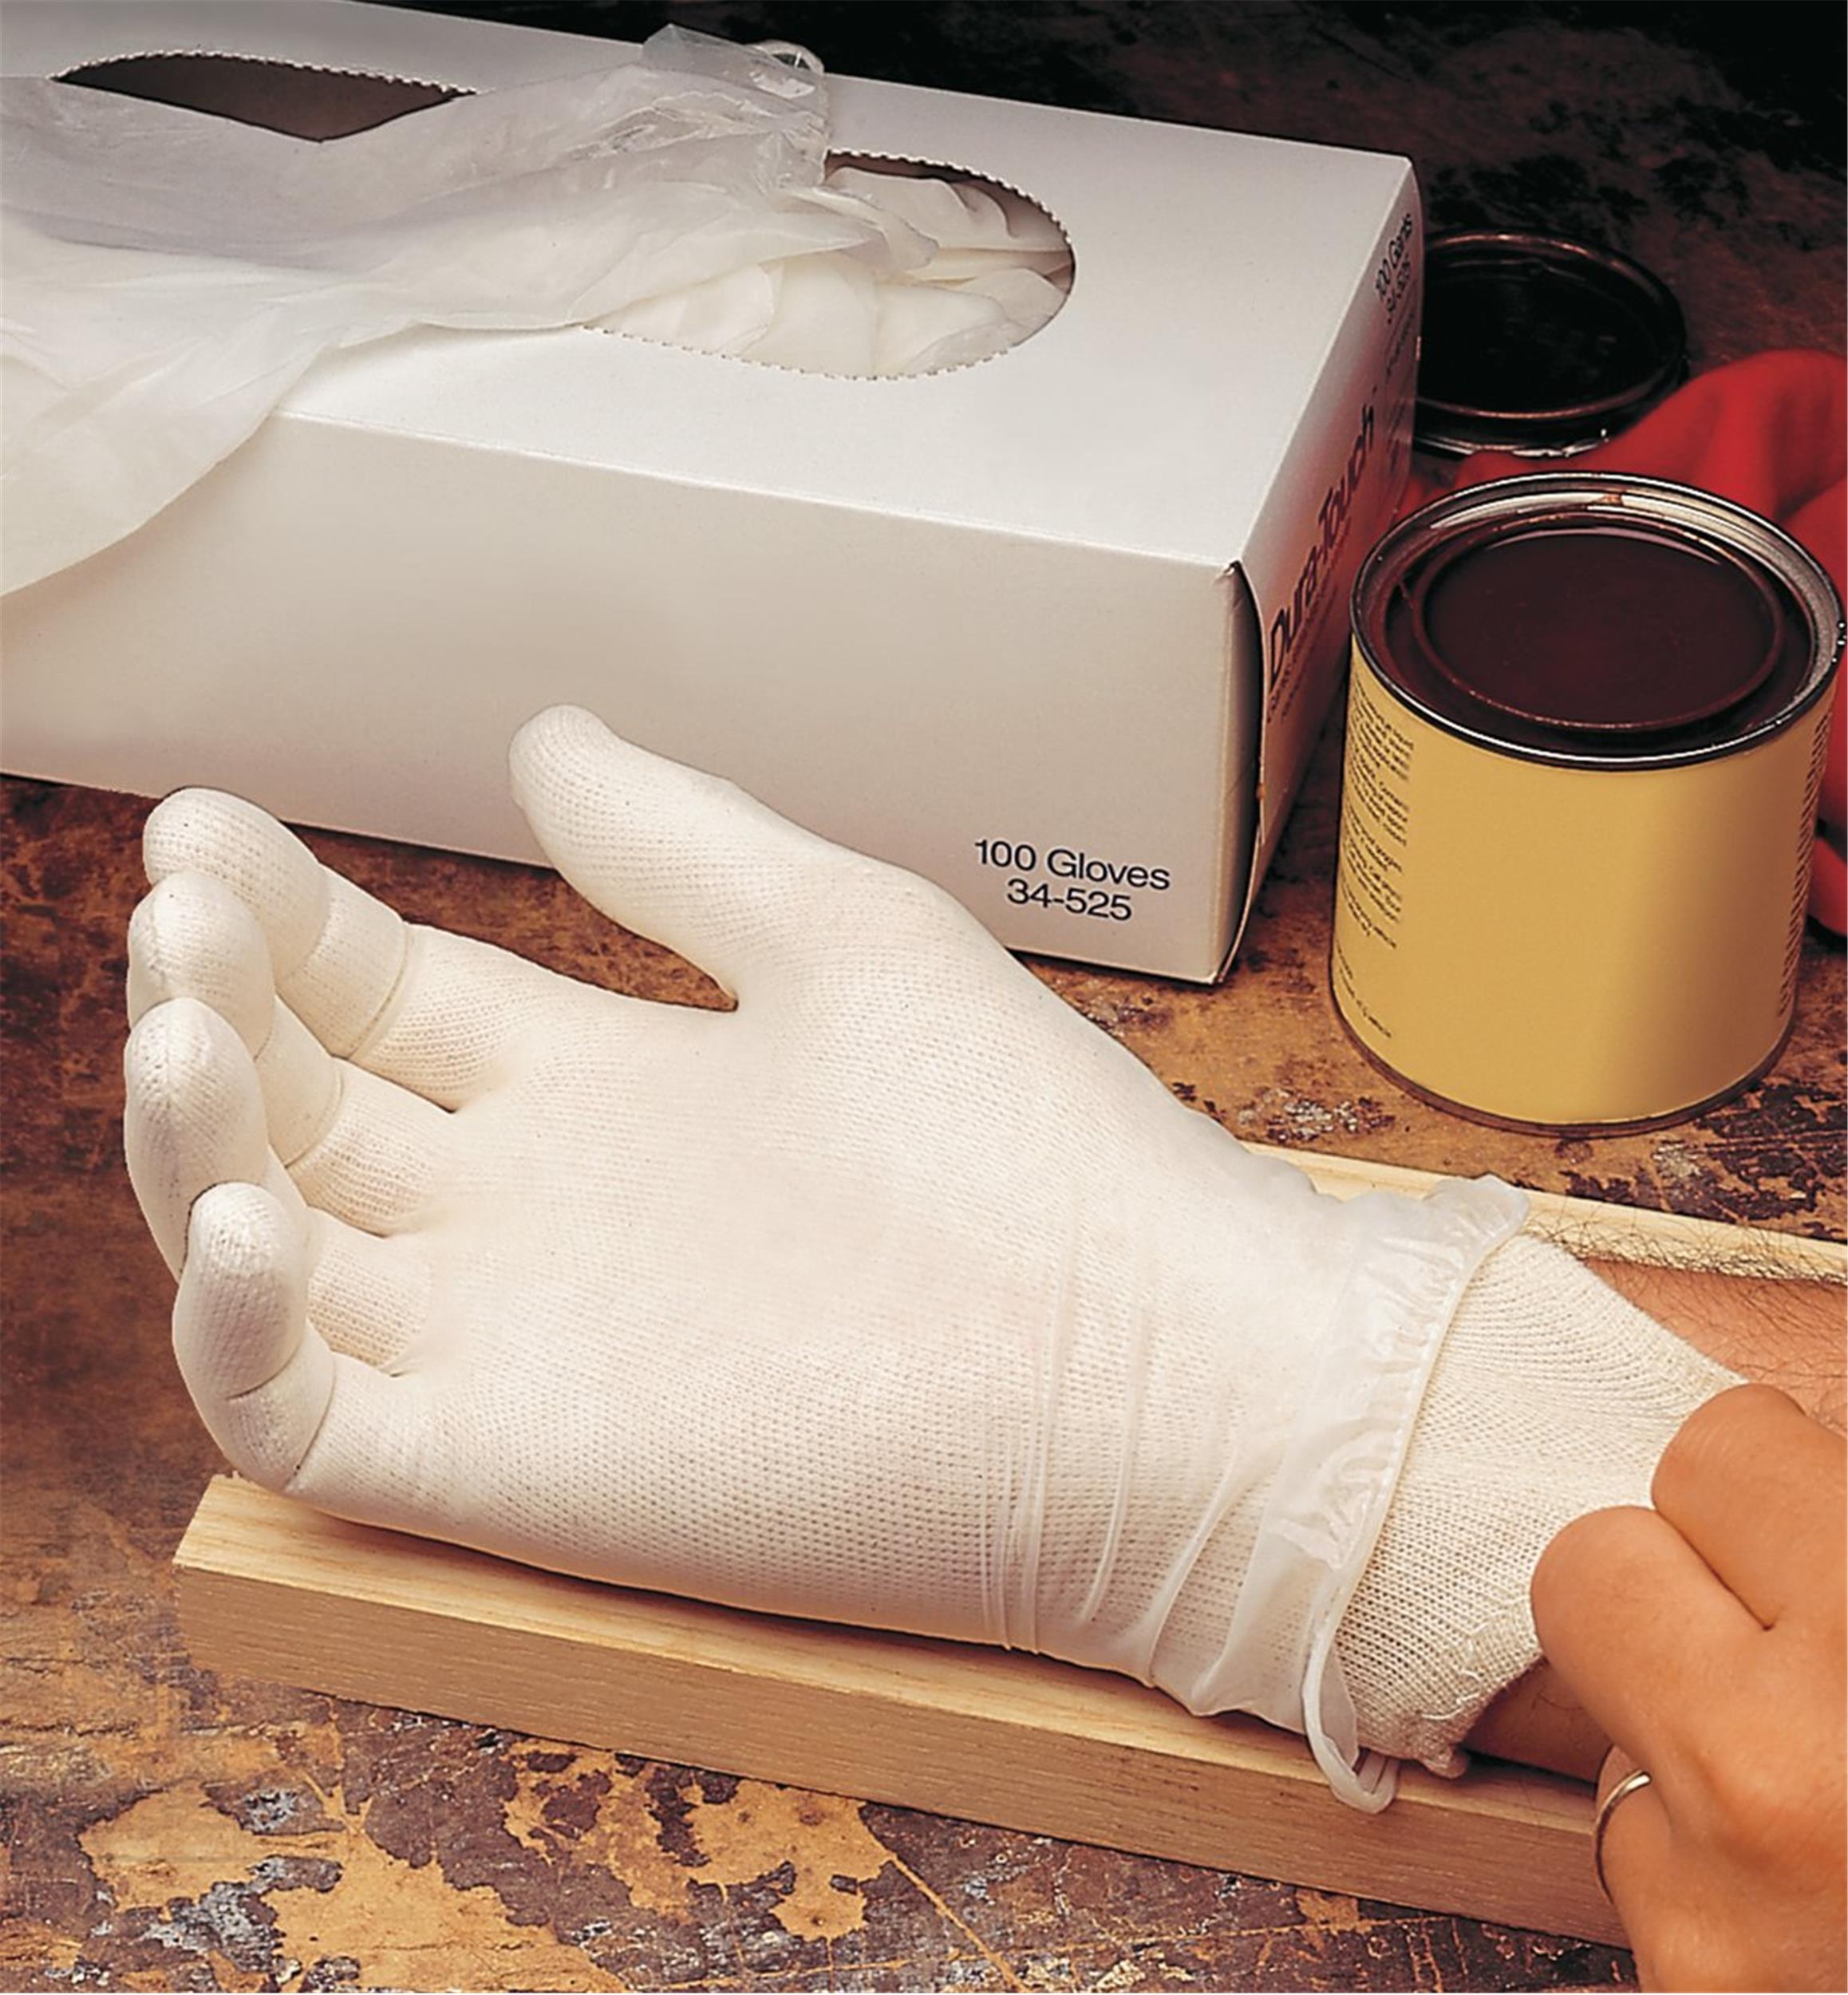 Cotton/Poly Glove Liners - US HANDBALL